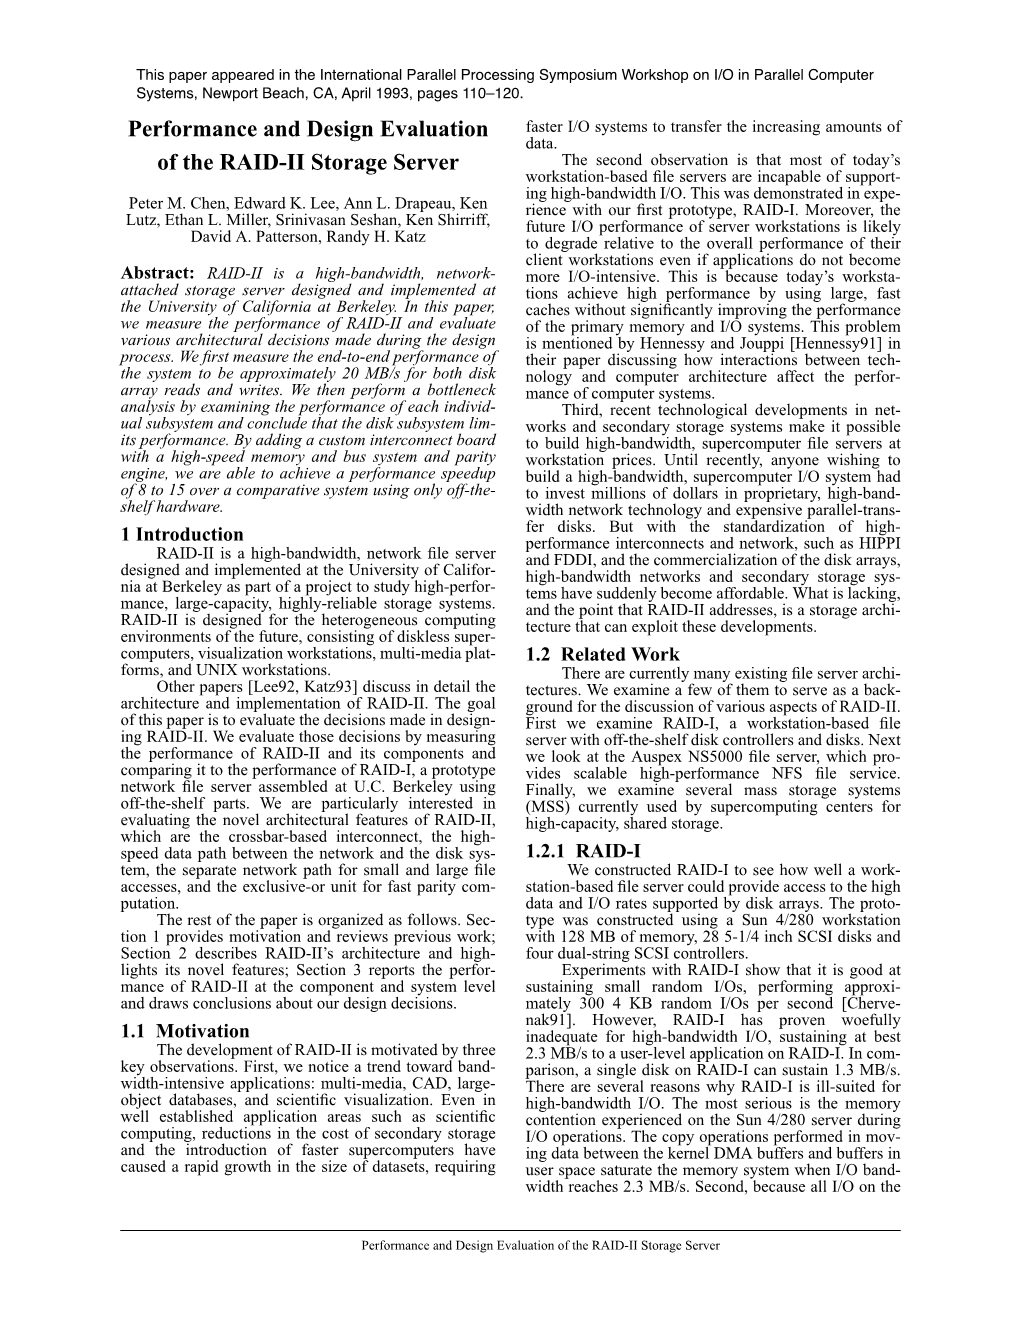 Performance and Design Evaluation of the RAID-II Storage Server